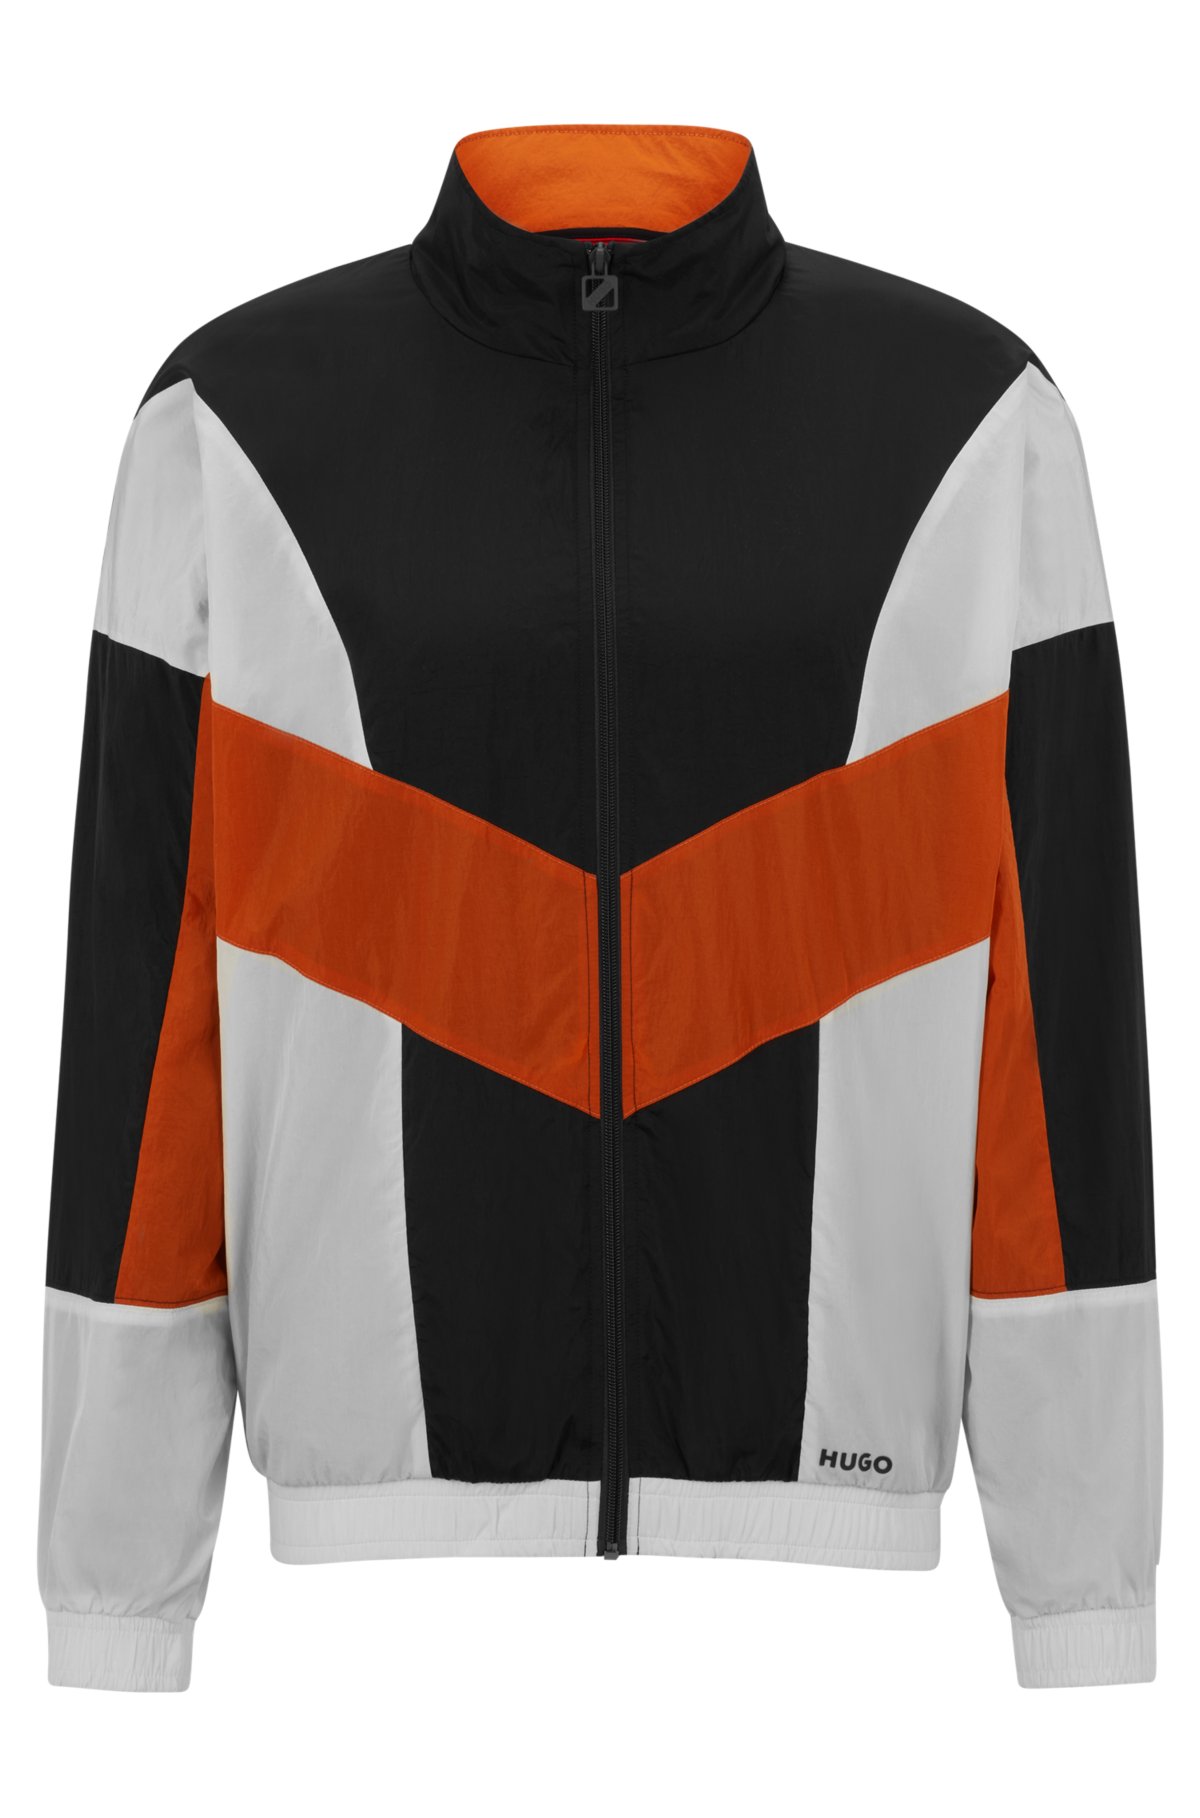 HUGO - Colour-blocked zip-up jacket with logo print